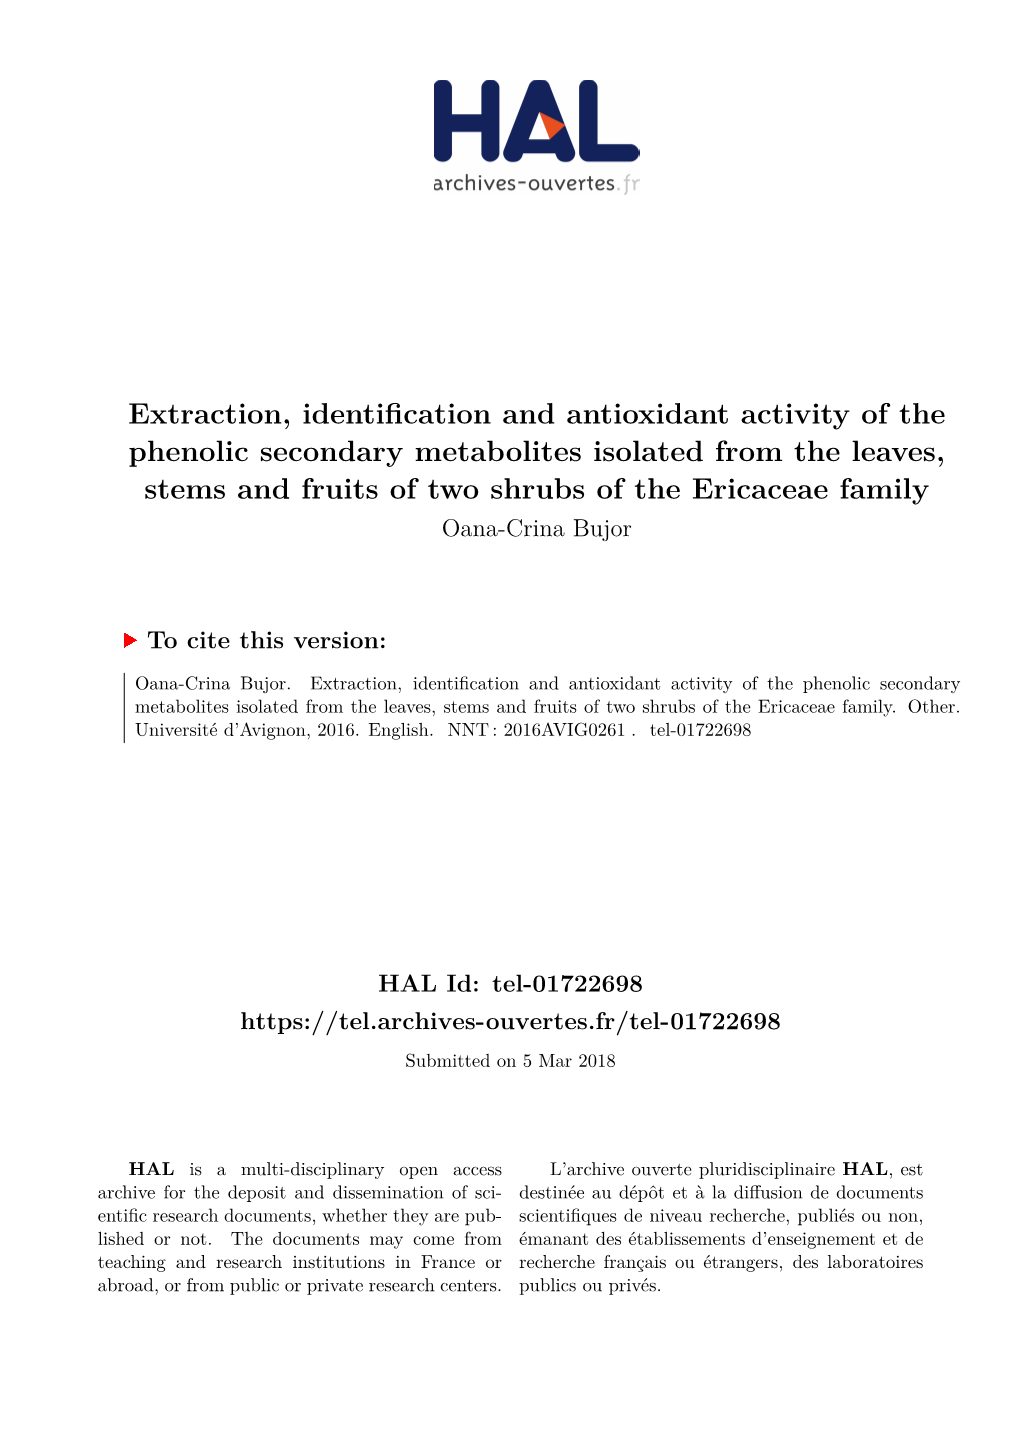 Extraction, Identification and Antioxidant Activity of the Phenolic